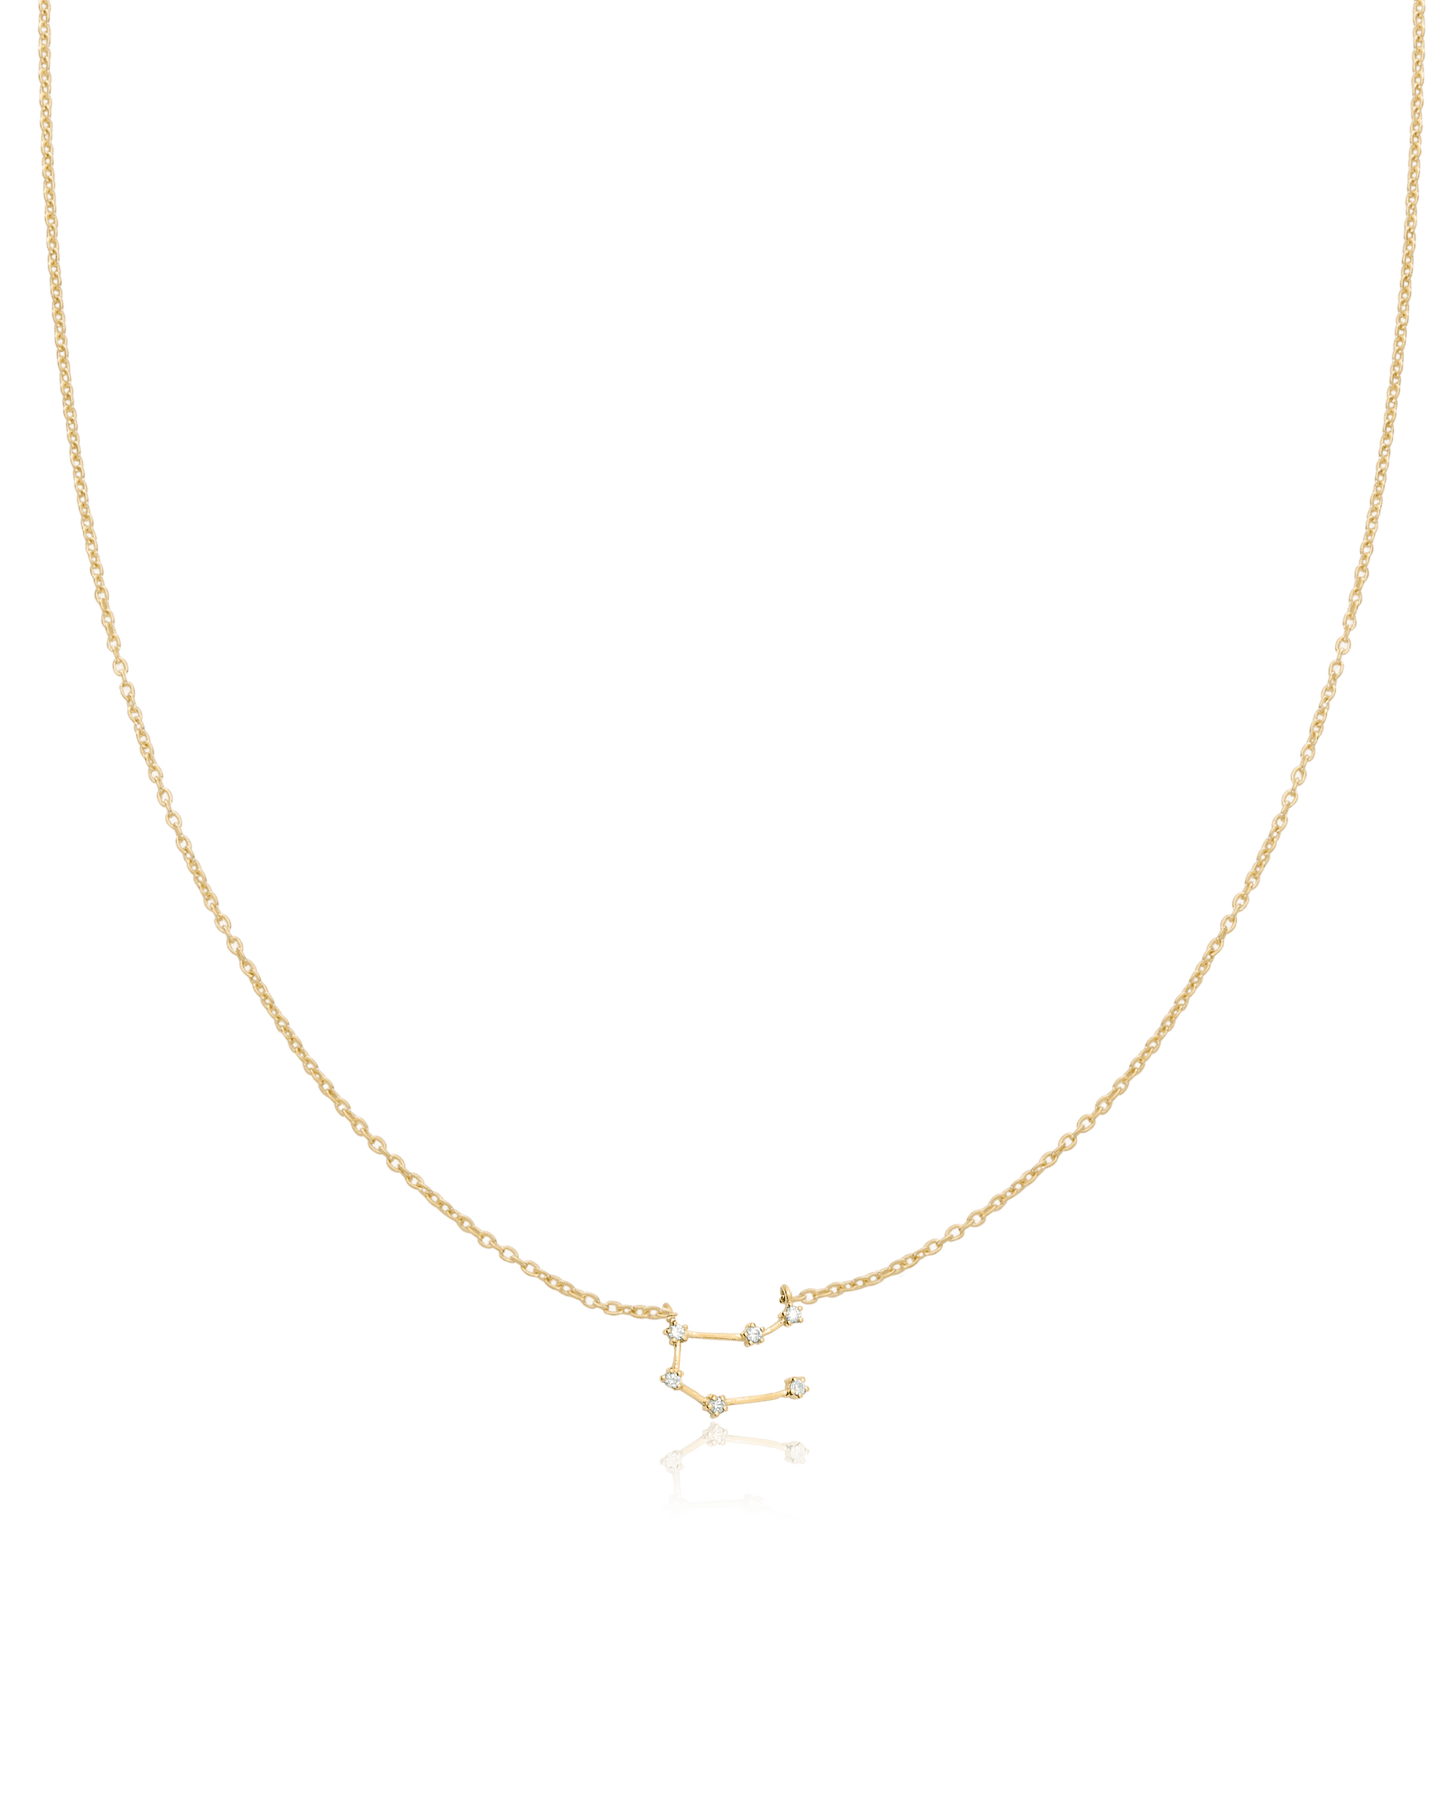 Gemini Constellation Necklace - 18K Gold Vermeil Necklaces magal-dev 16" 